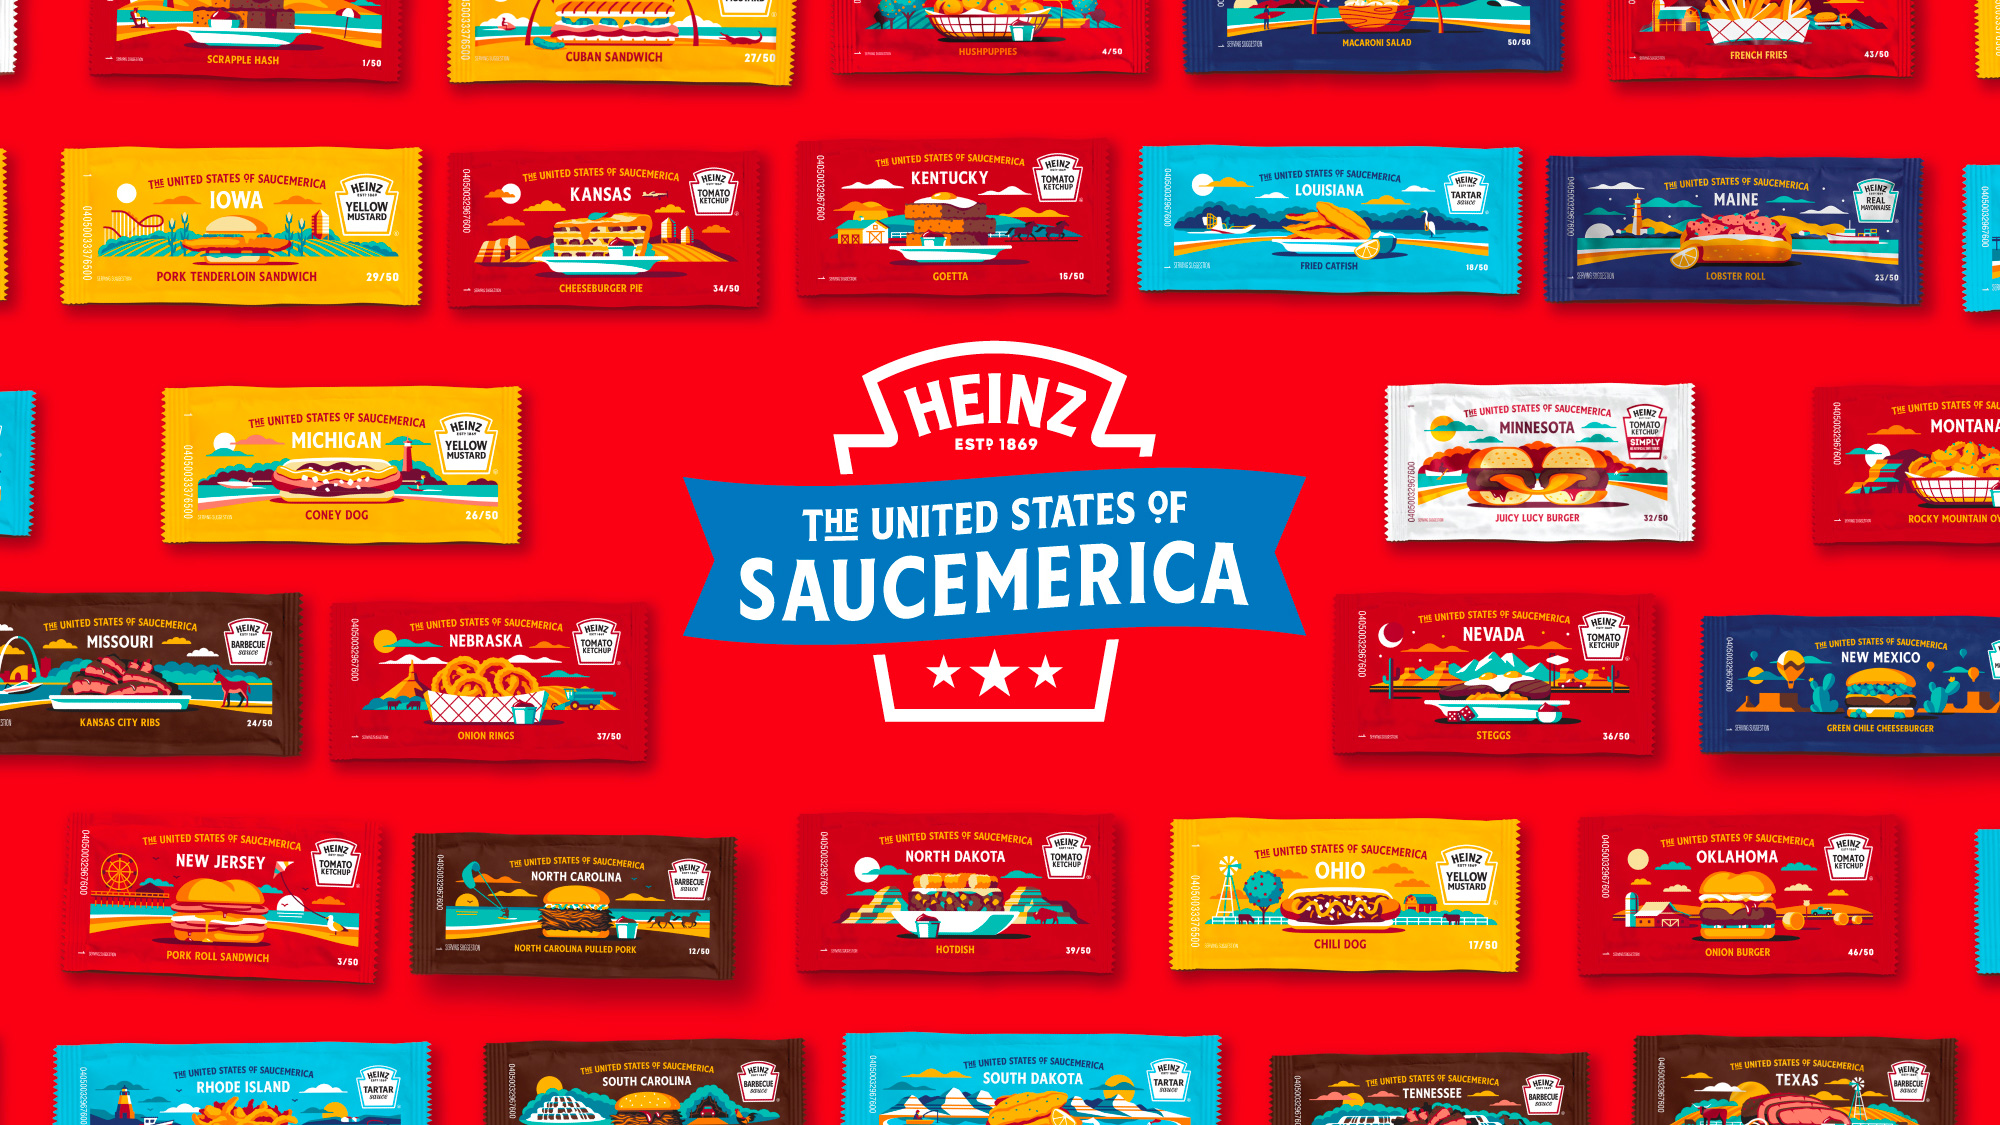 Heinz’s “Sauceamerica” Packets